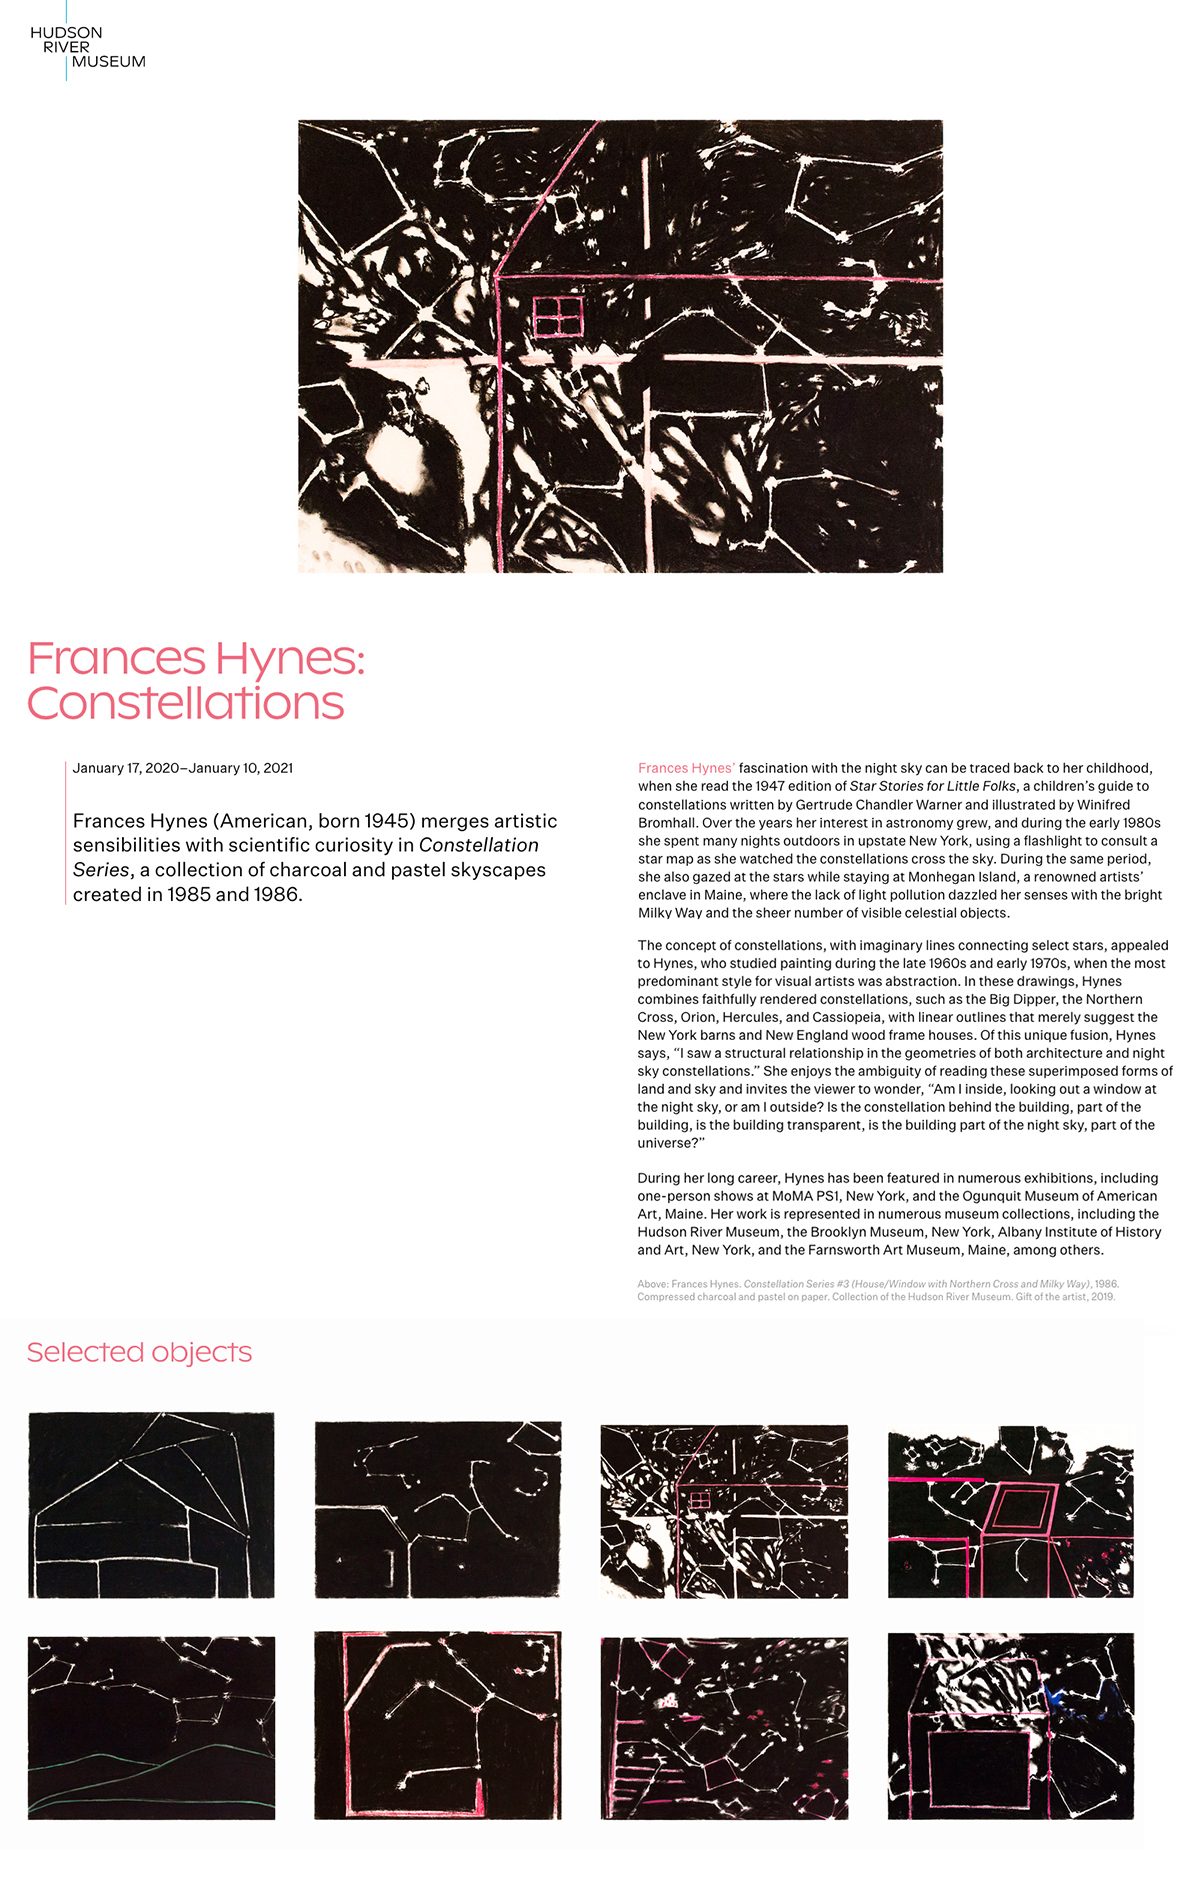 Frances Hynes HUDSON RIVER MUSEUM 2020: FRANCES HYNES: CONSTELLATIONS 1985 – 1986 